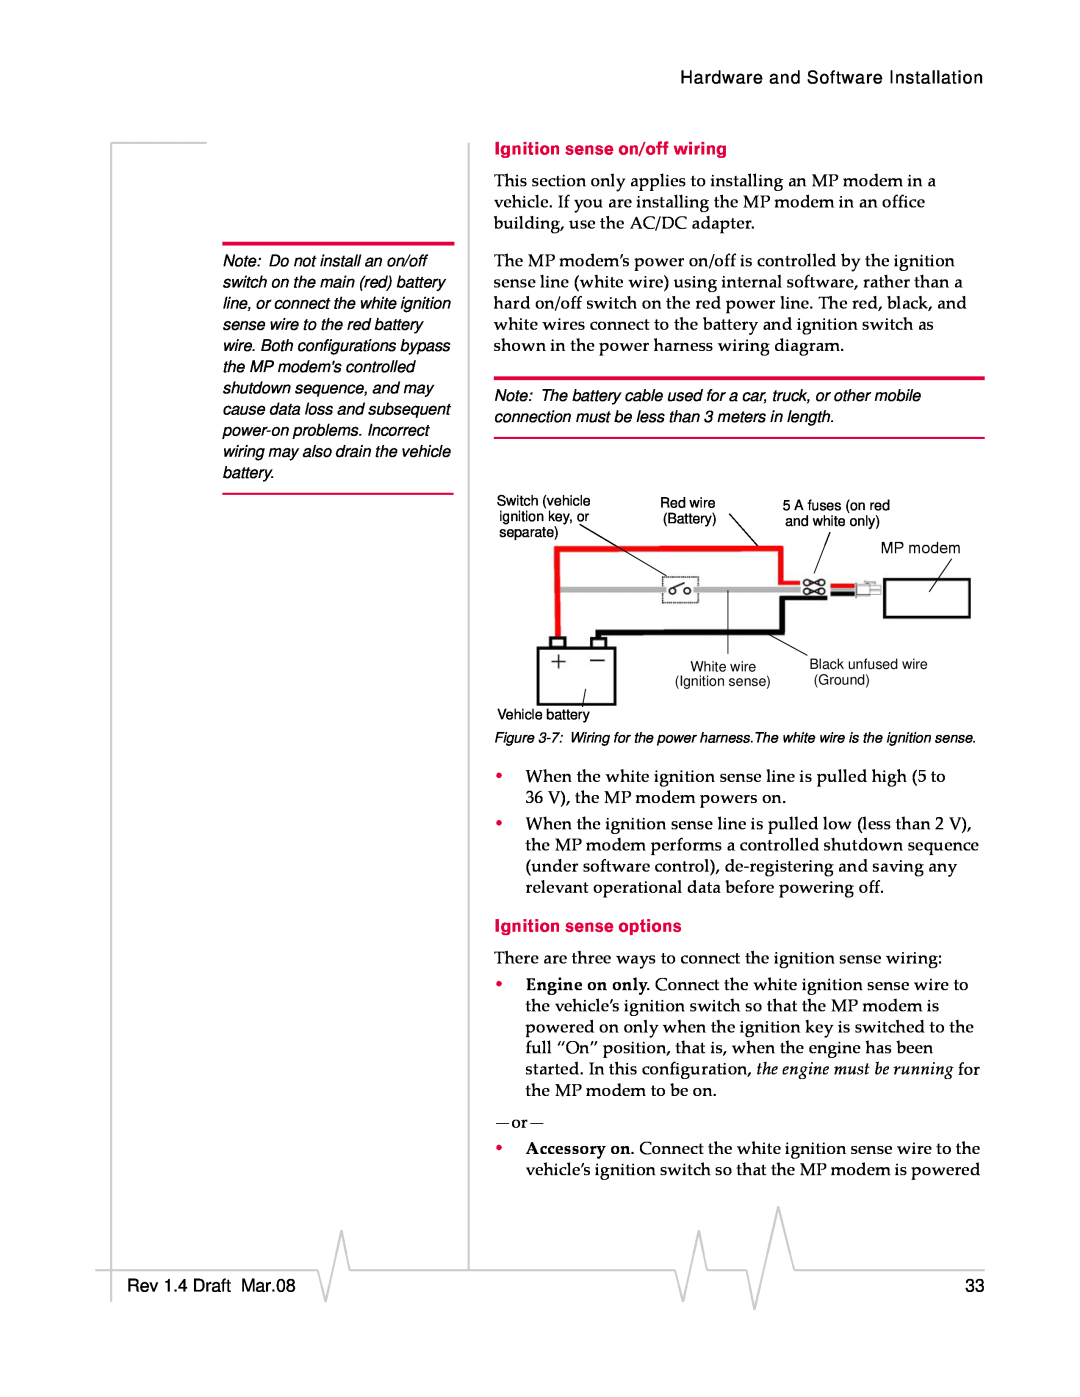 Sierra Wireless MP595W manual Ignition sense on/off wiring, Ignition sense options 